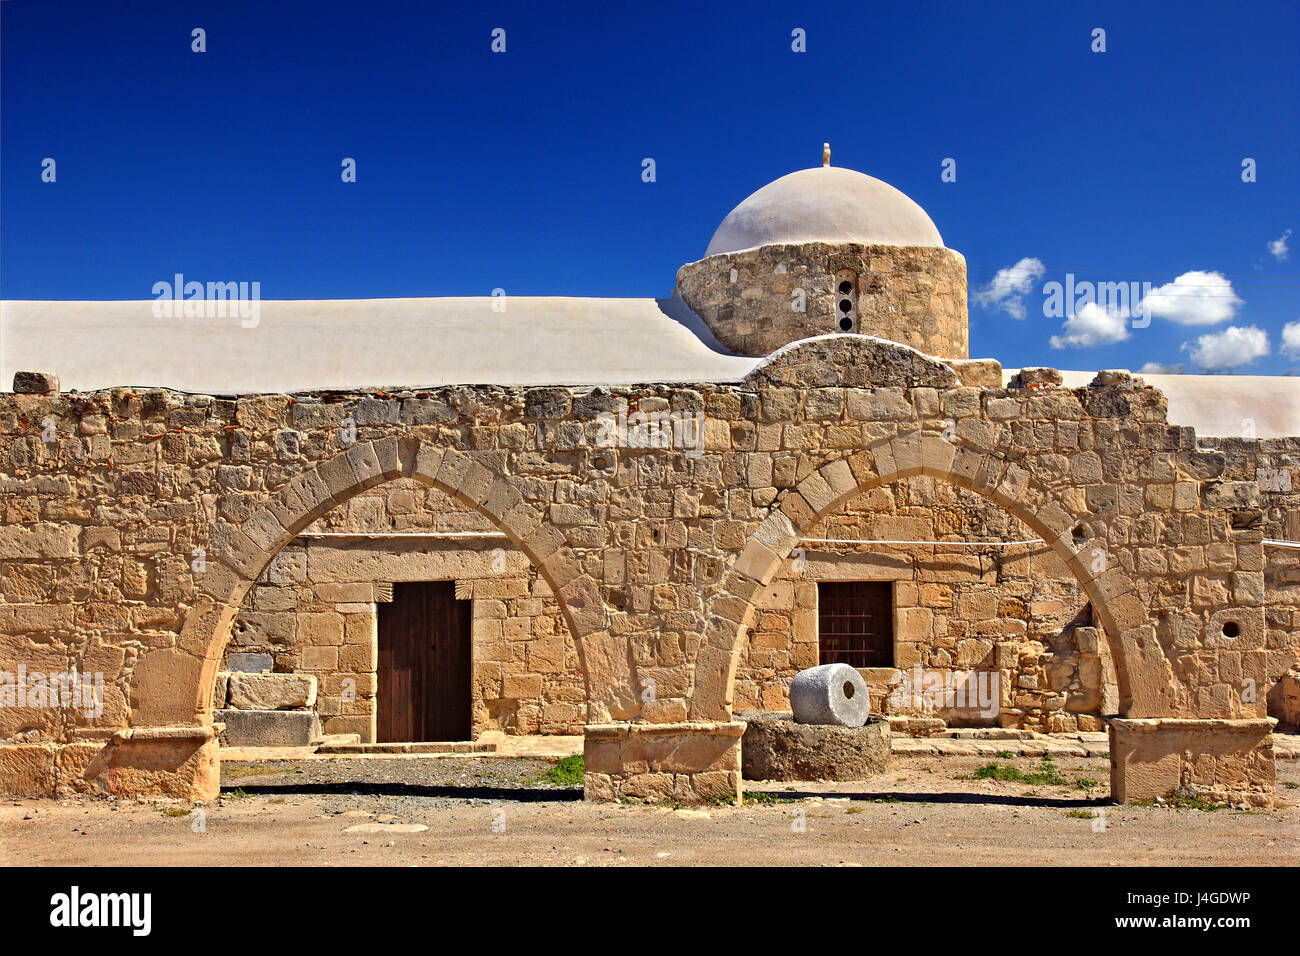 La chiesa bizantina di panagia katholiki accanto al sito archeologico di palaipaphos, a kouklia village, distretto di Paphos, Cipro isola. Foto Stock